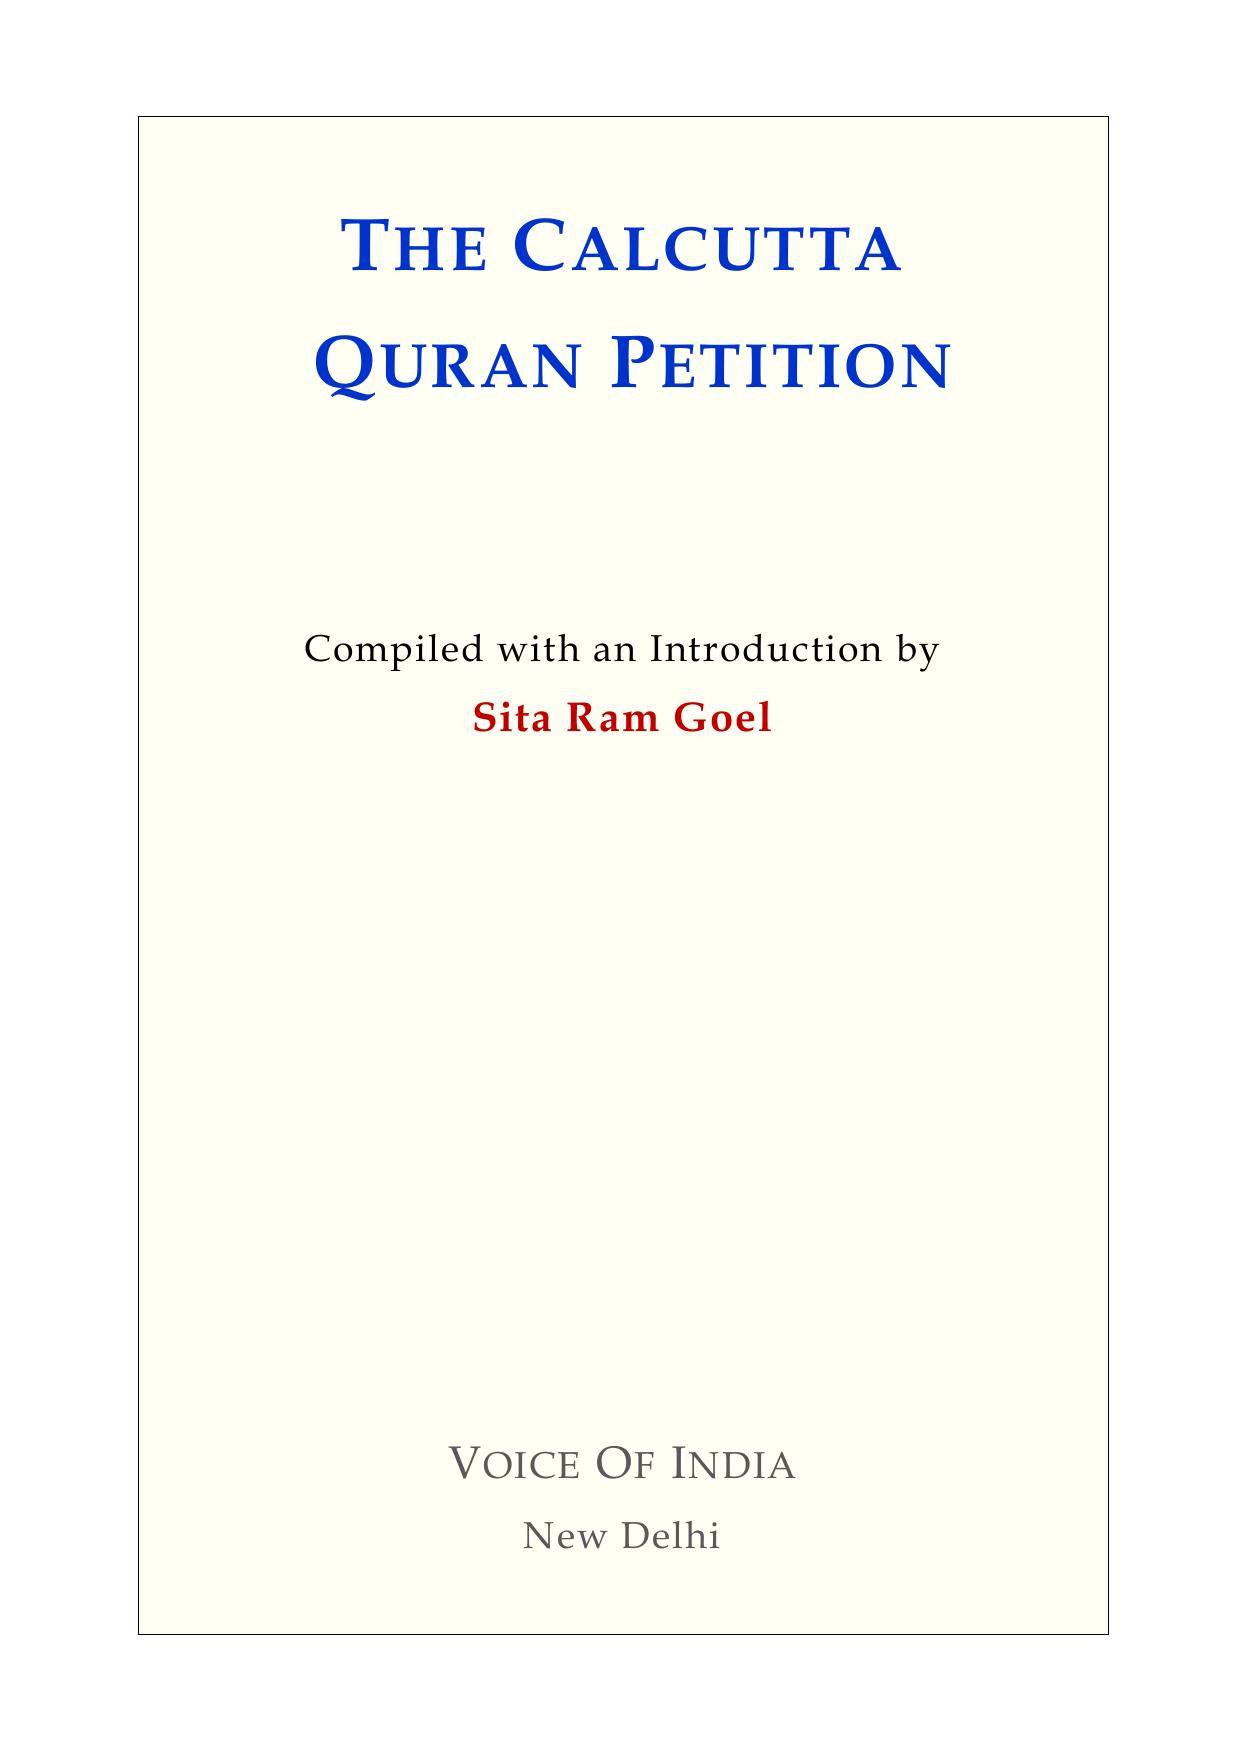 The Calcutta Quran Petition by Sita Ram Goel